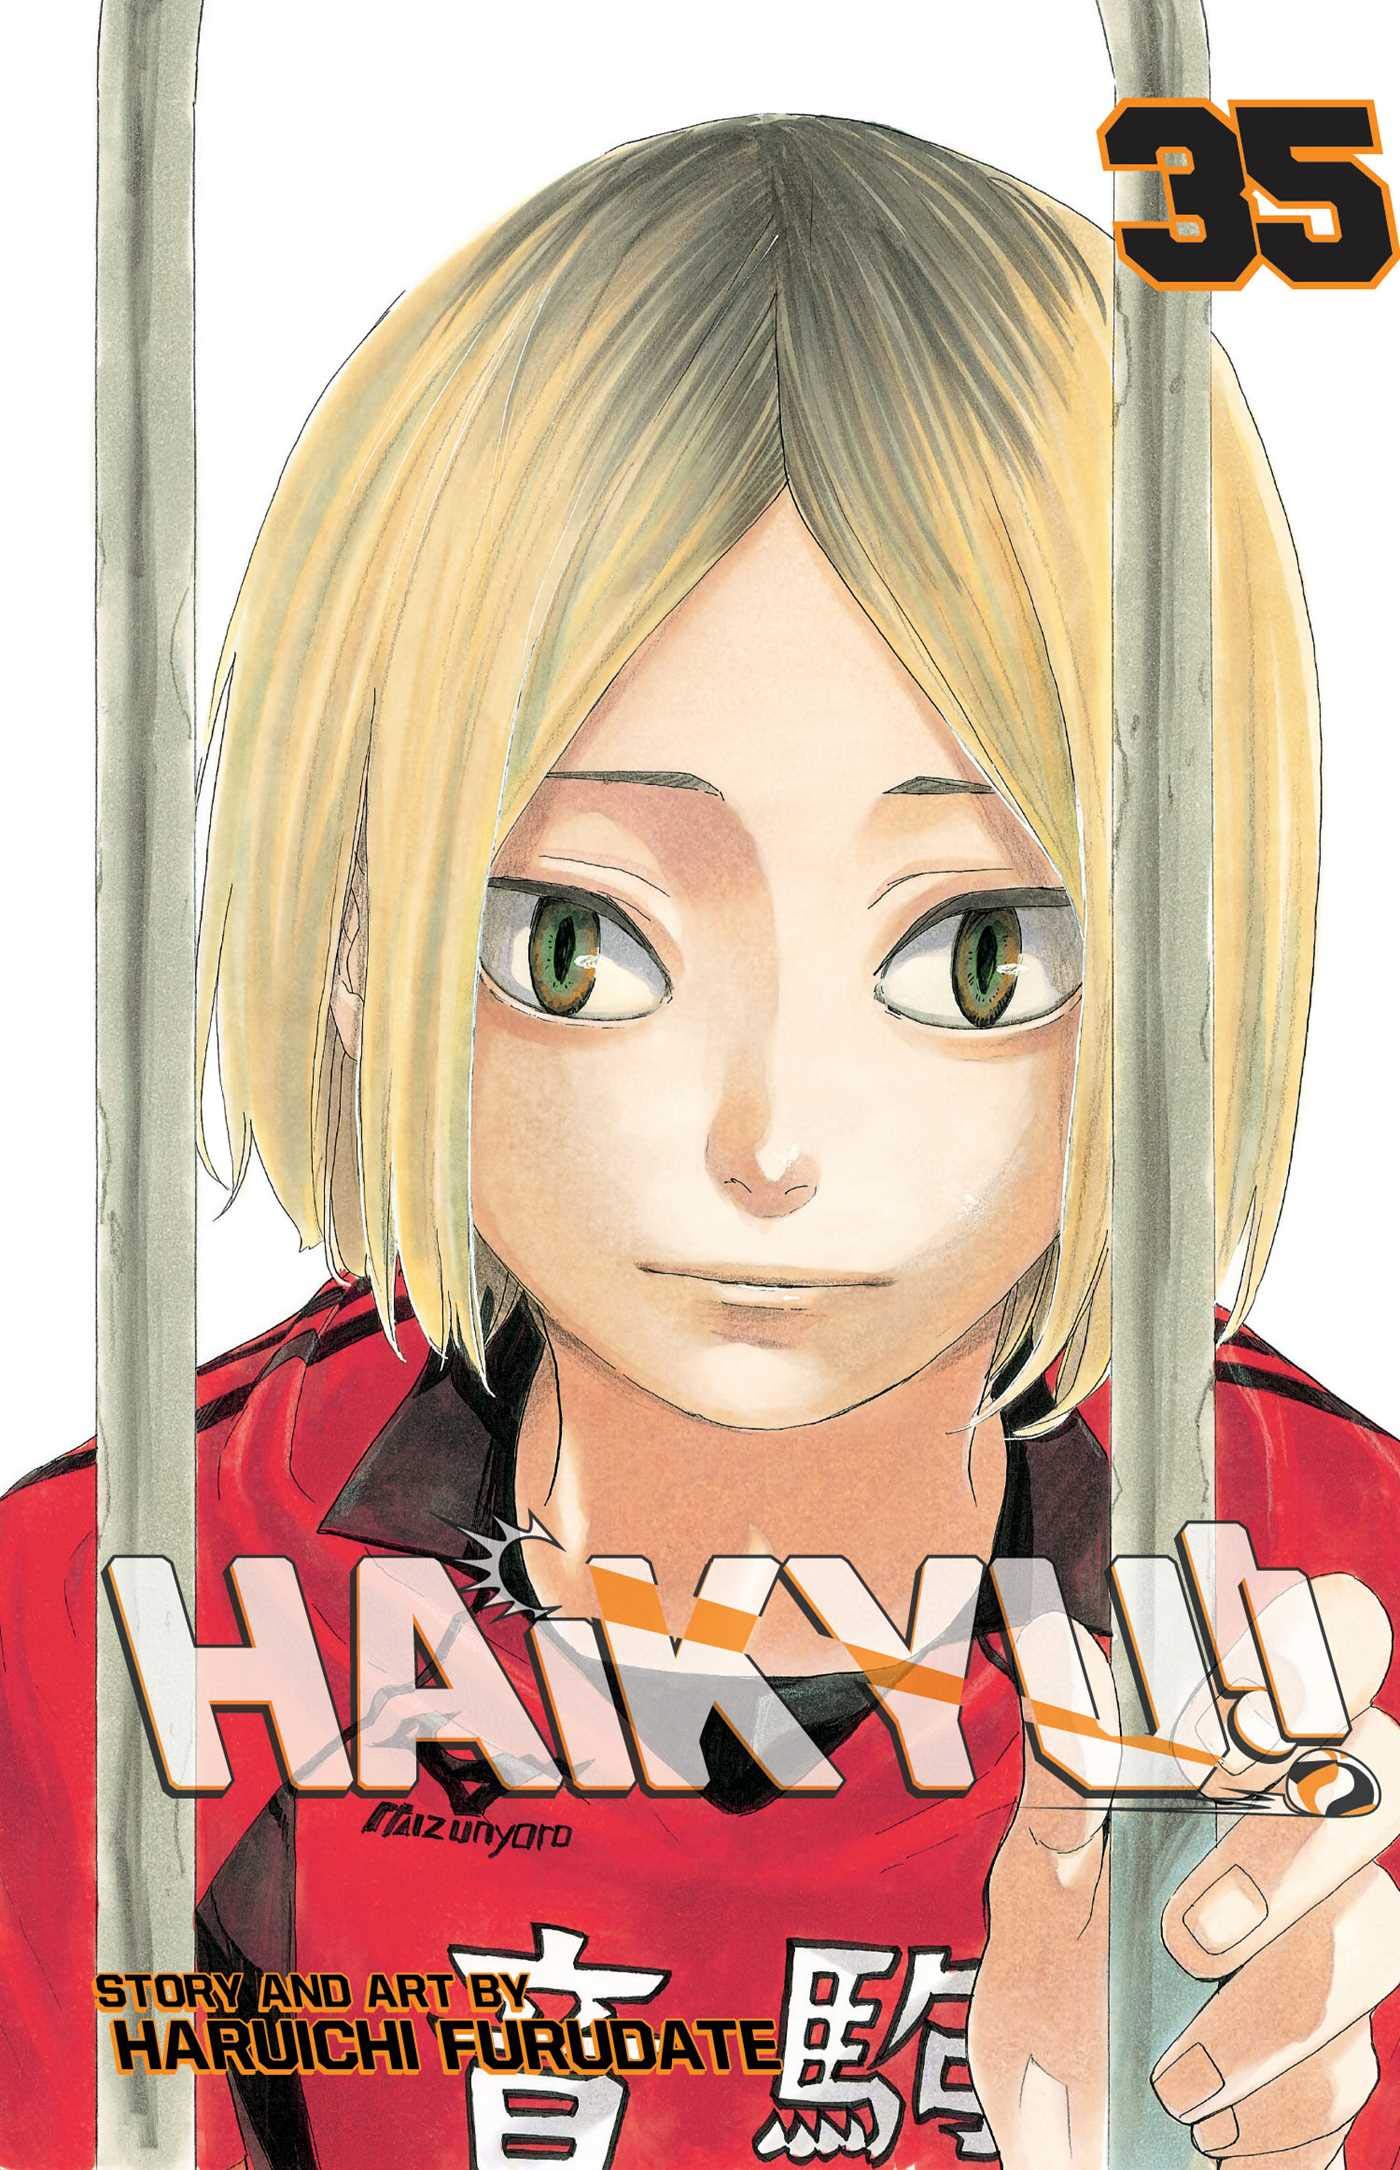 Haikyu!! Volume 35 | Haruichi Furudate